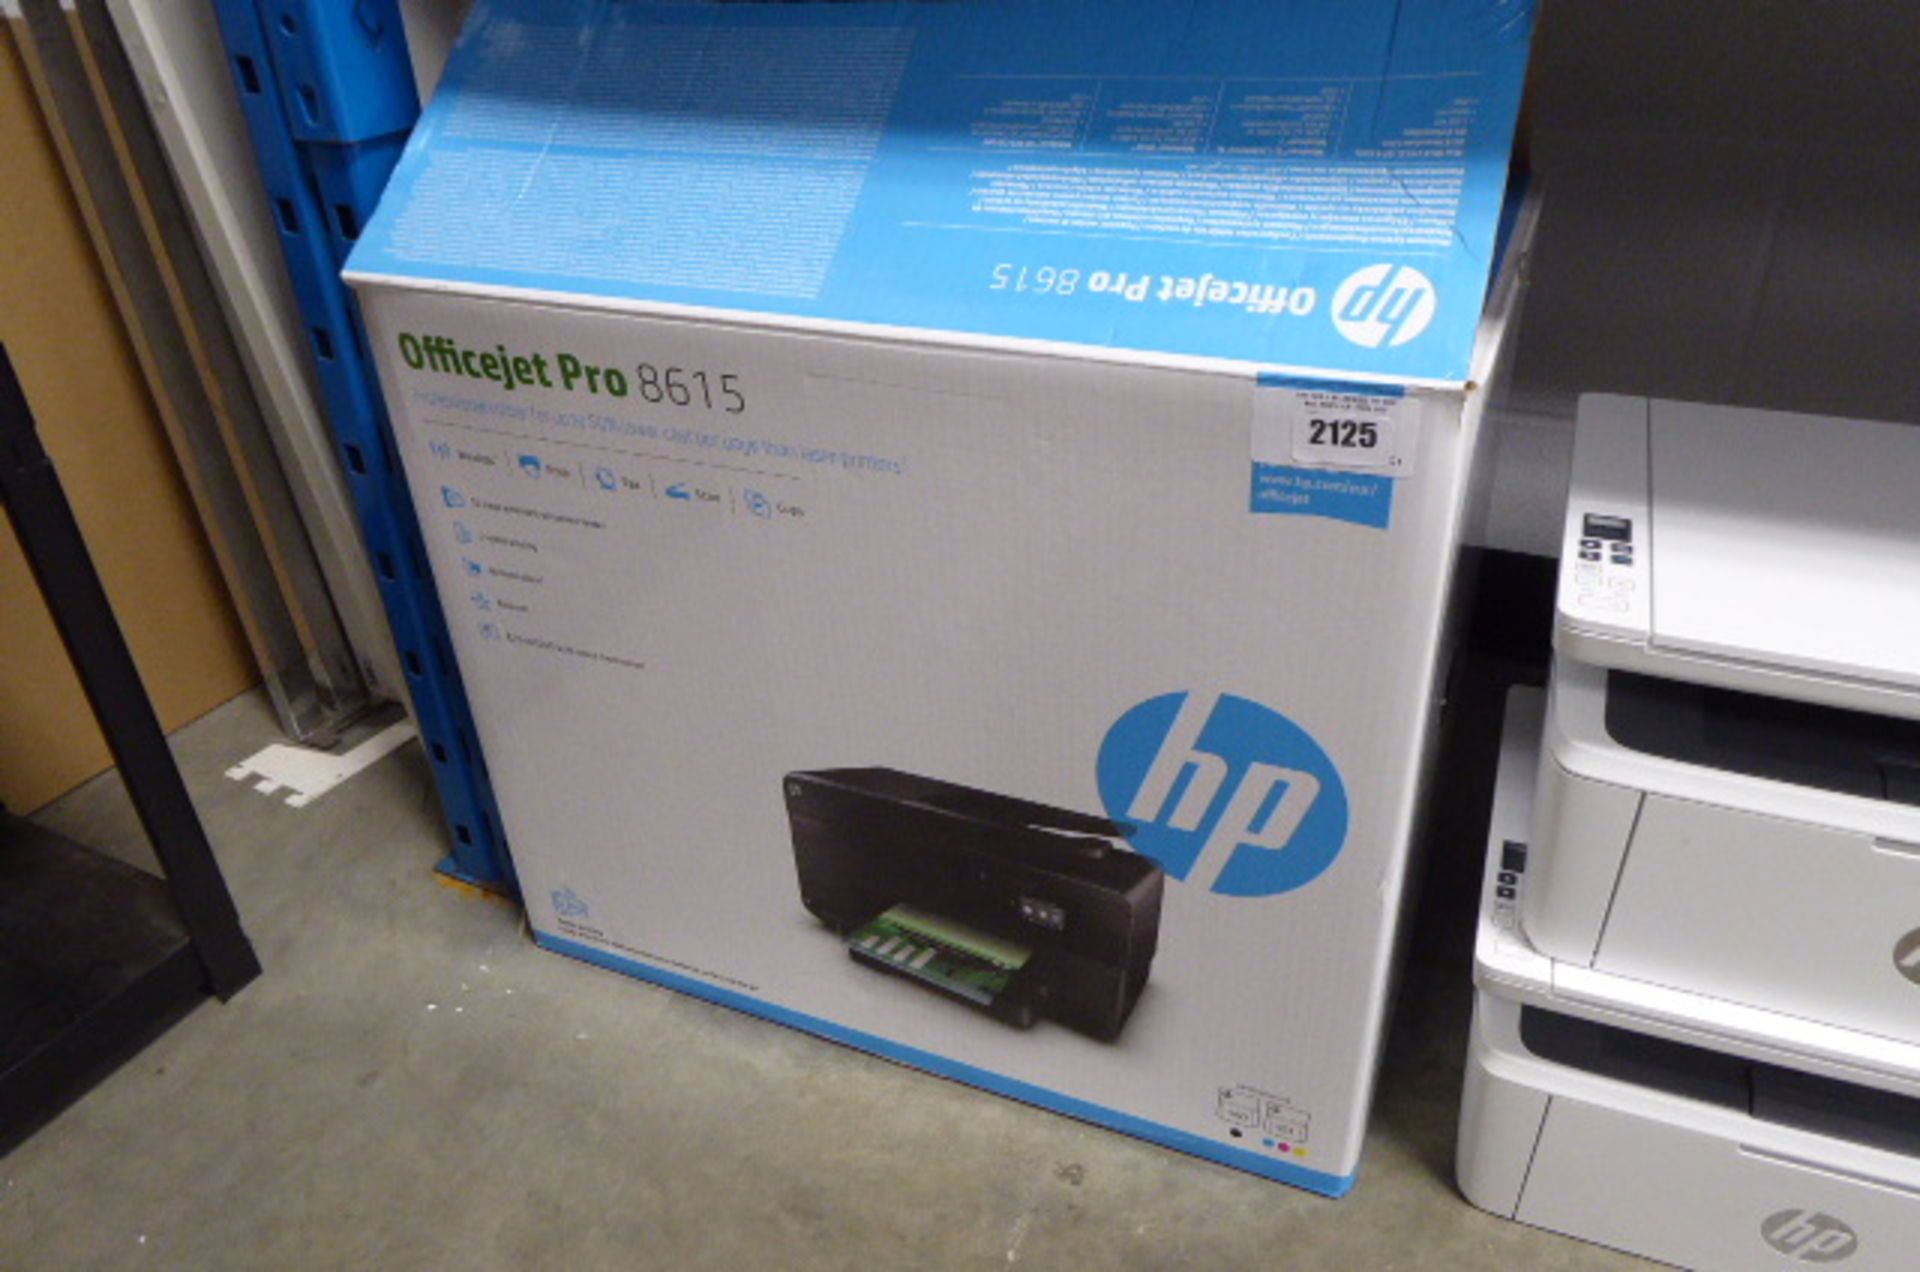 HP Officejet Pro 8615 printer in box